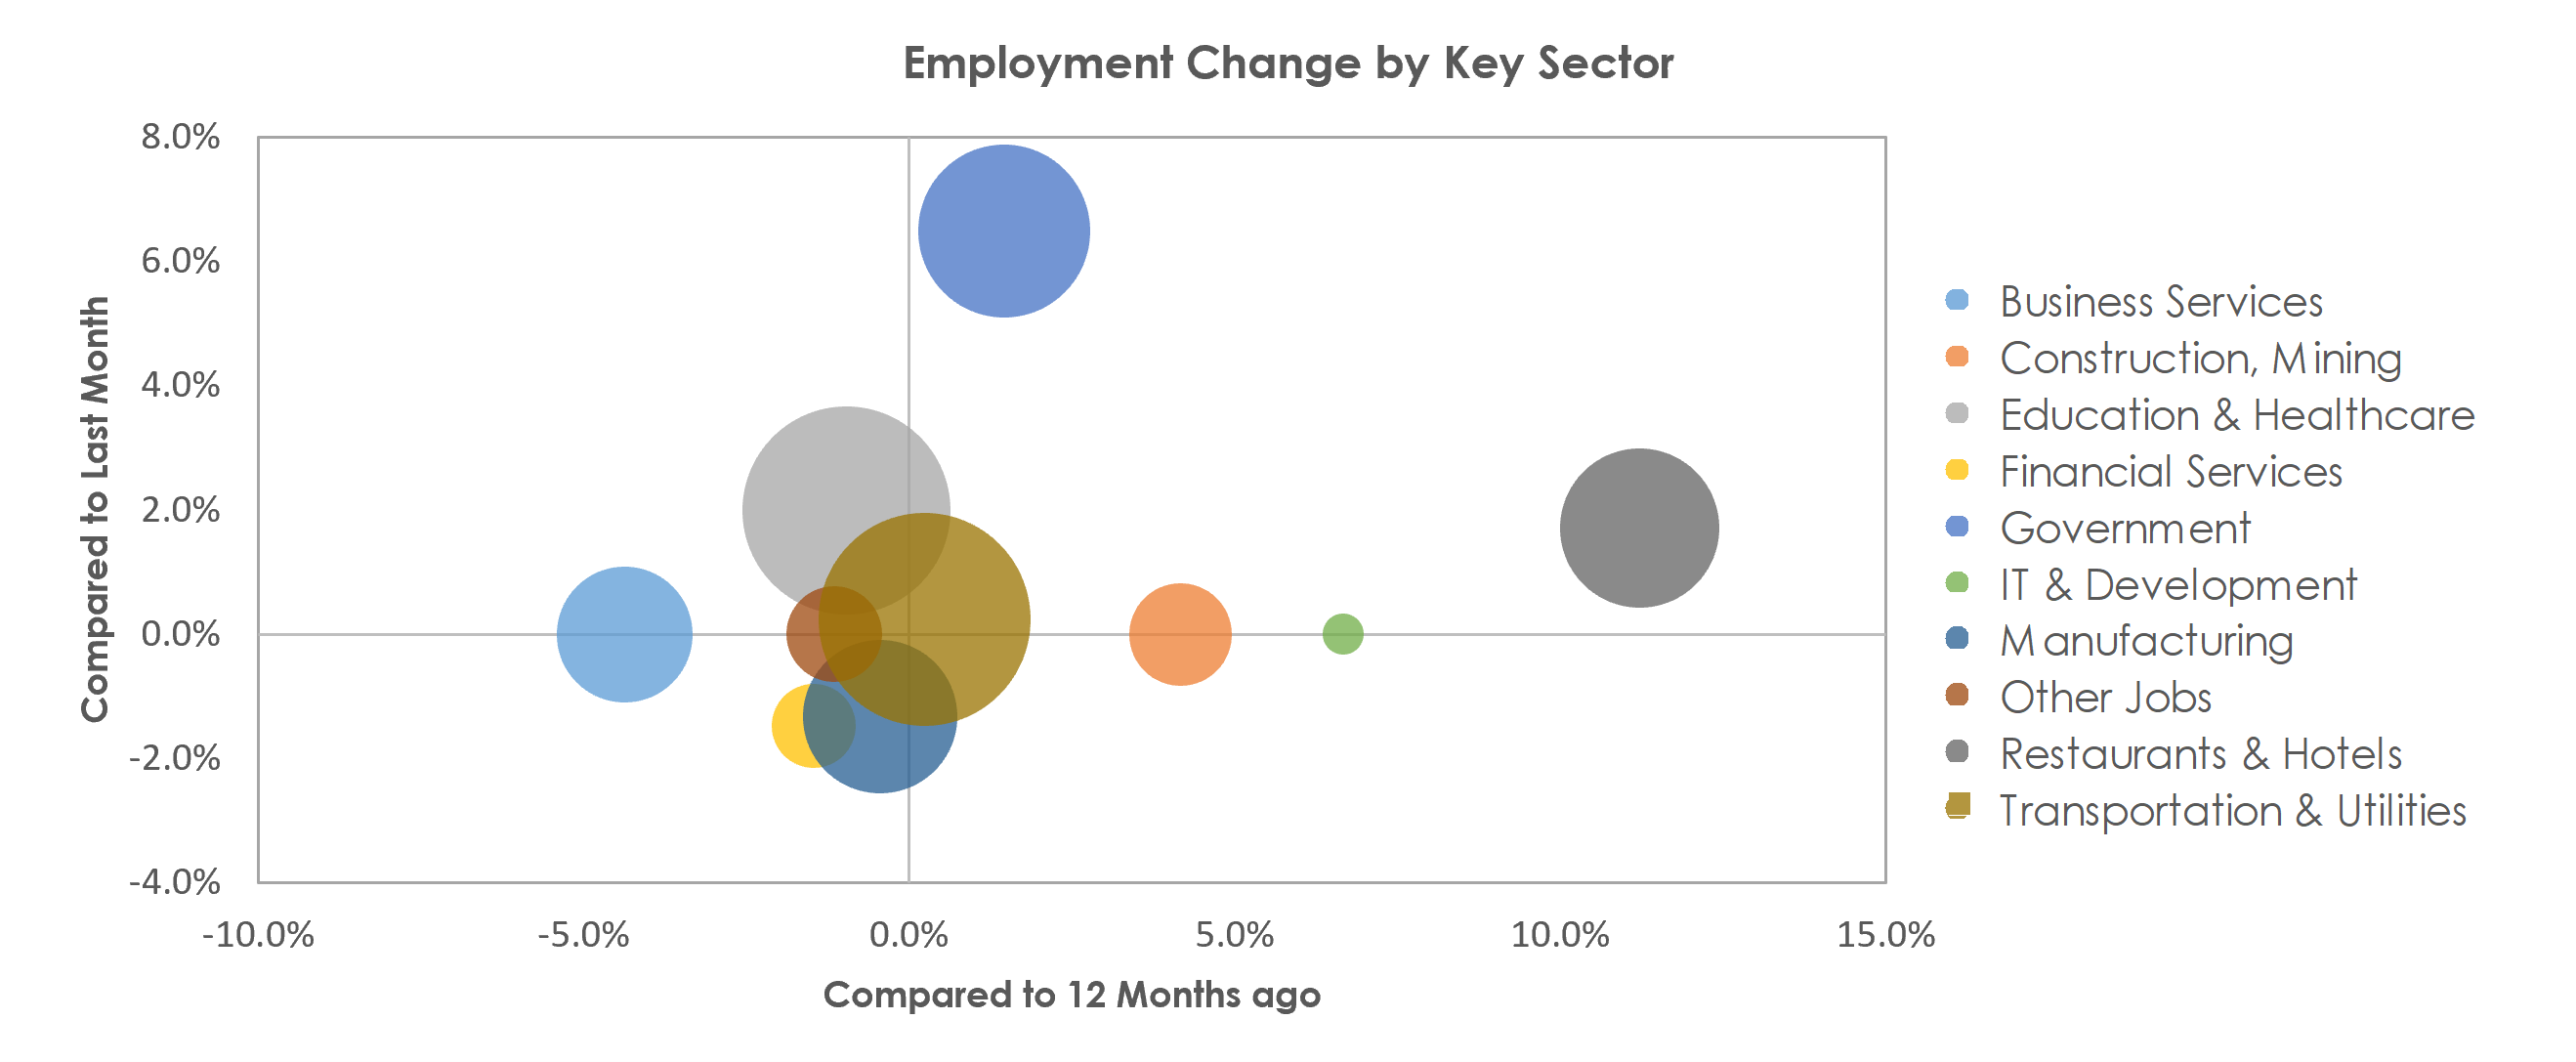 Youngstown-Warren-Boardman, OH-PA Unemployment by Industry September 2021